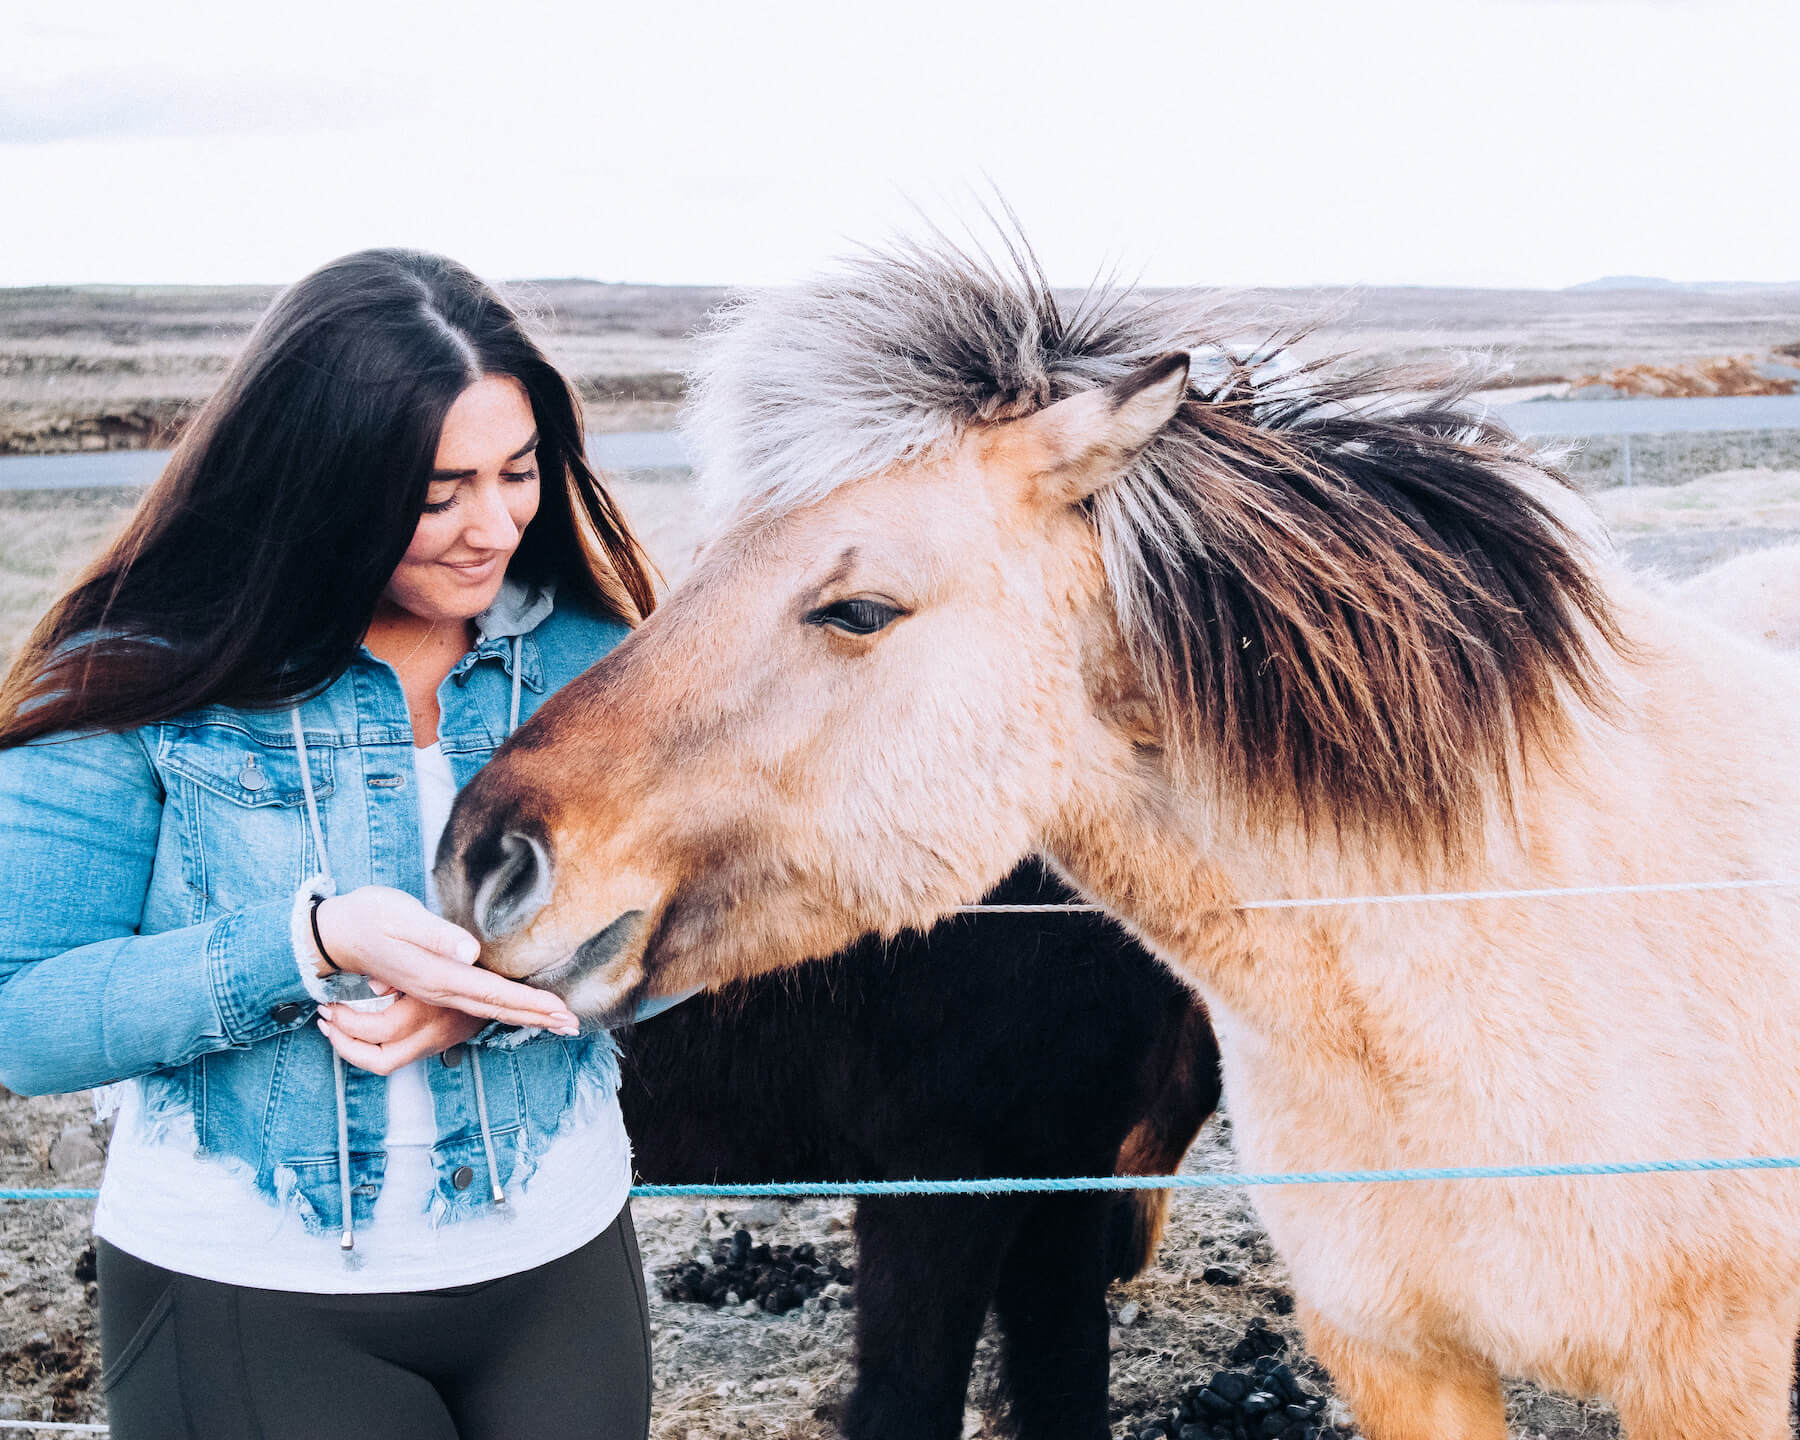 Life With Ashley Jones Travel To Iceland